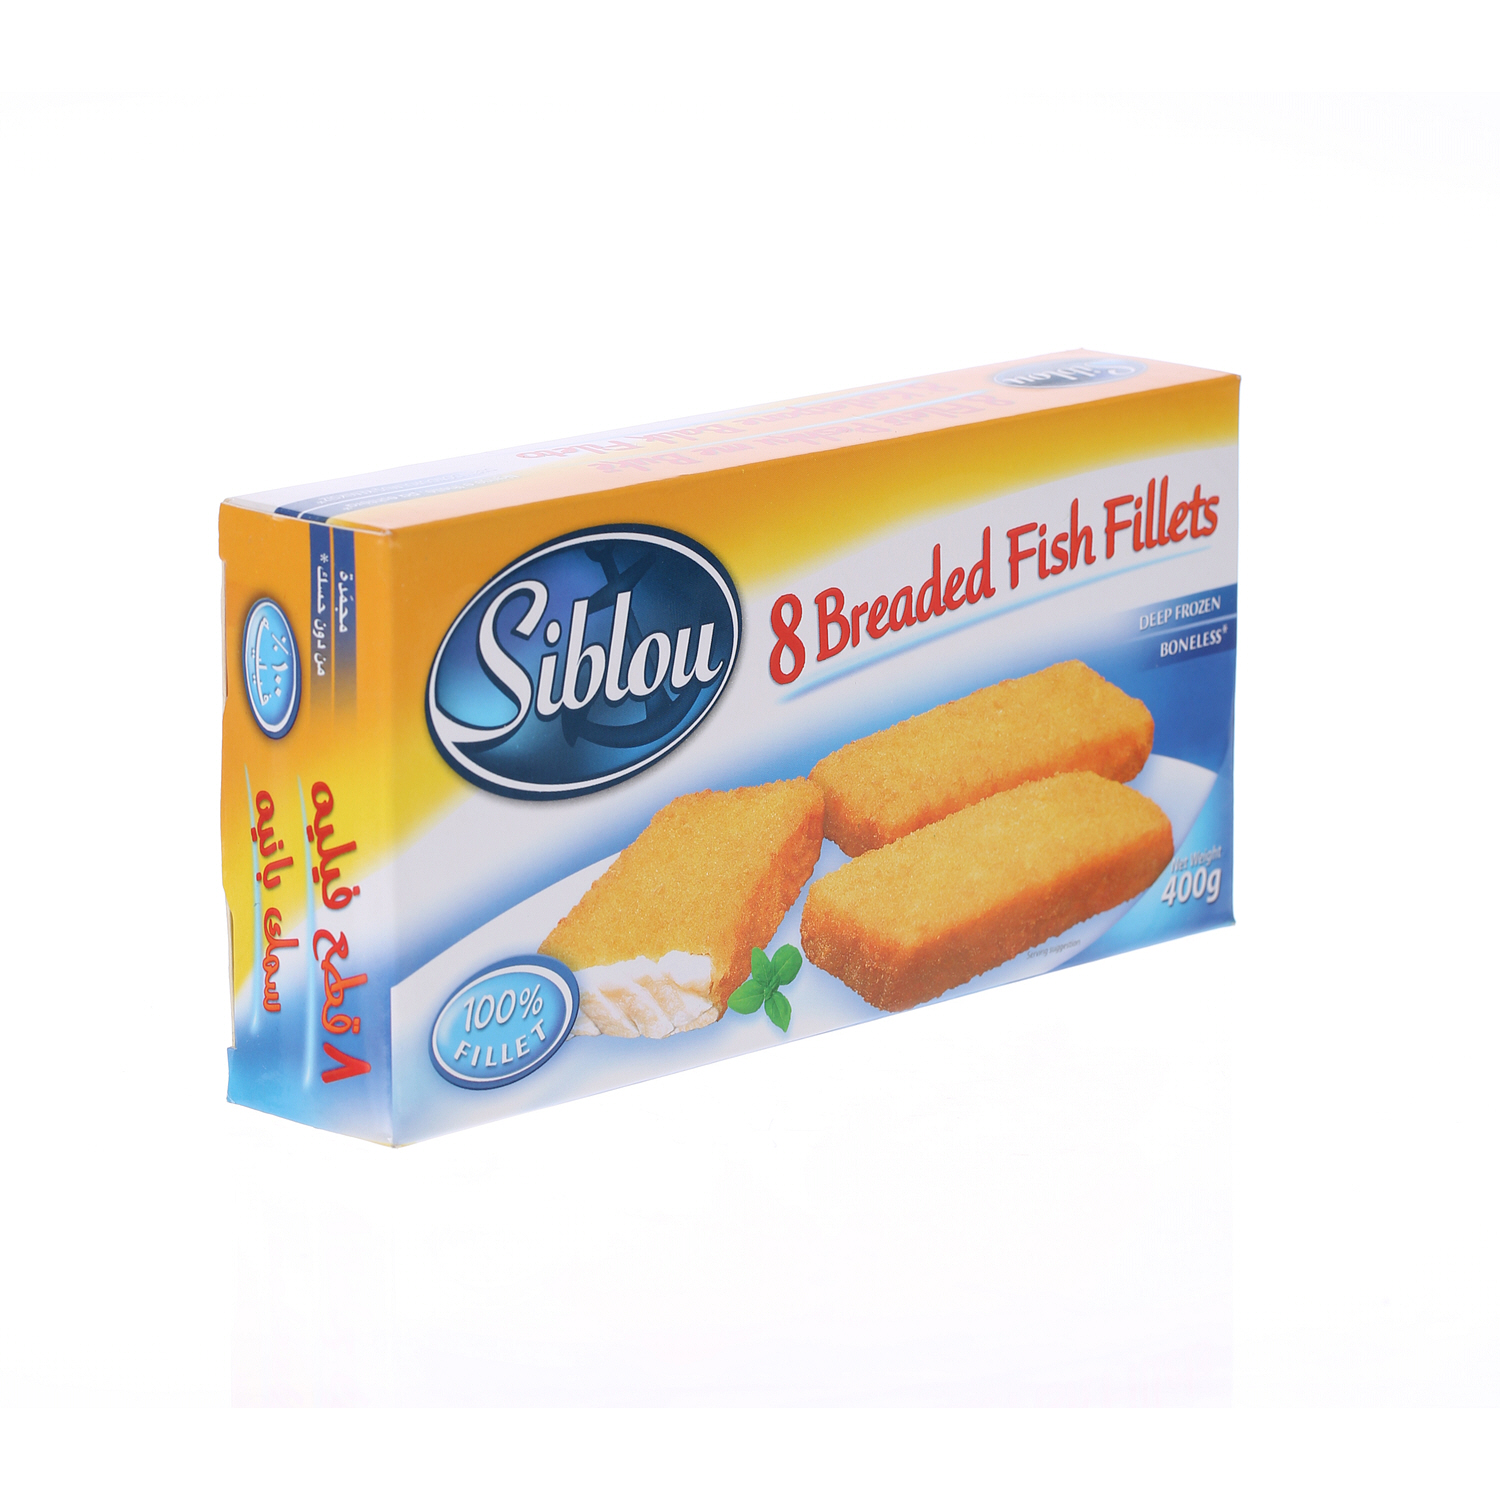 Siblou Breaded Fish Fillet 400 g × 8 Pack